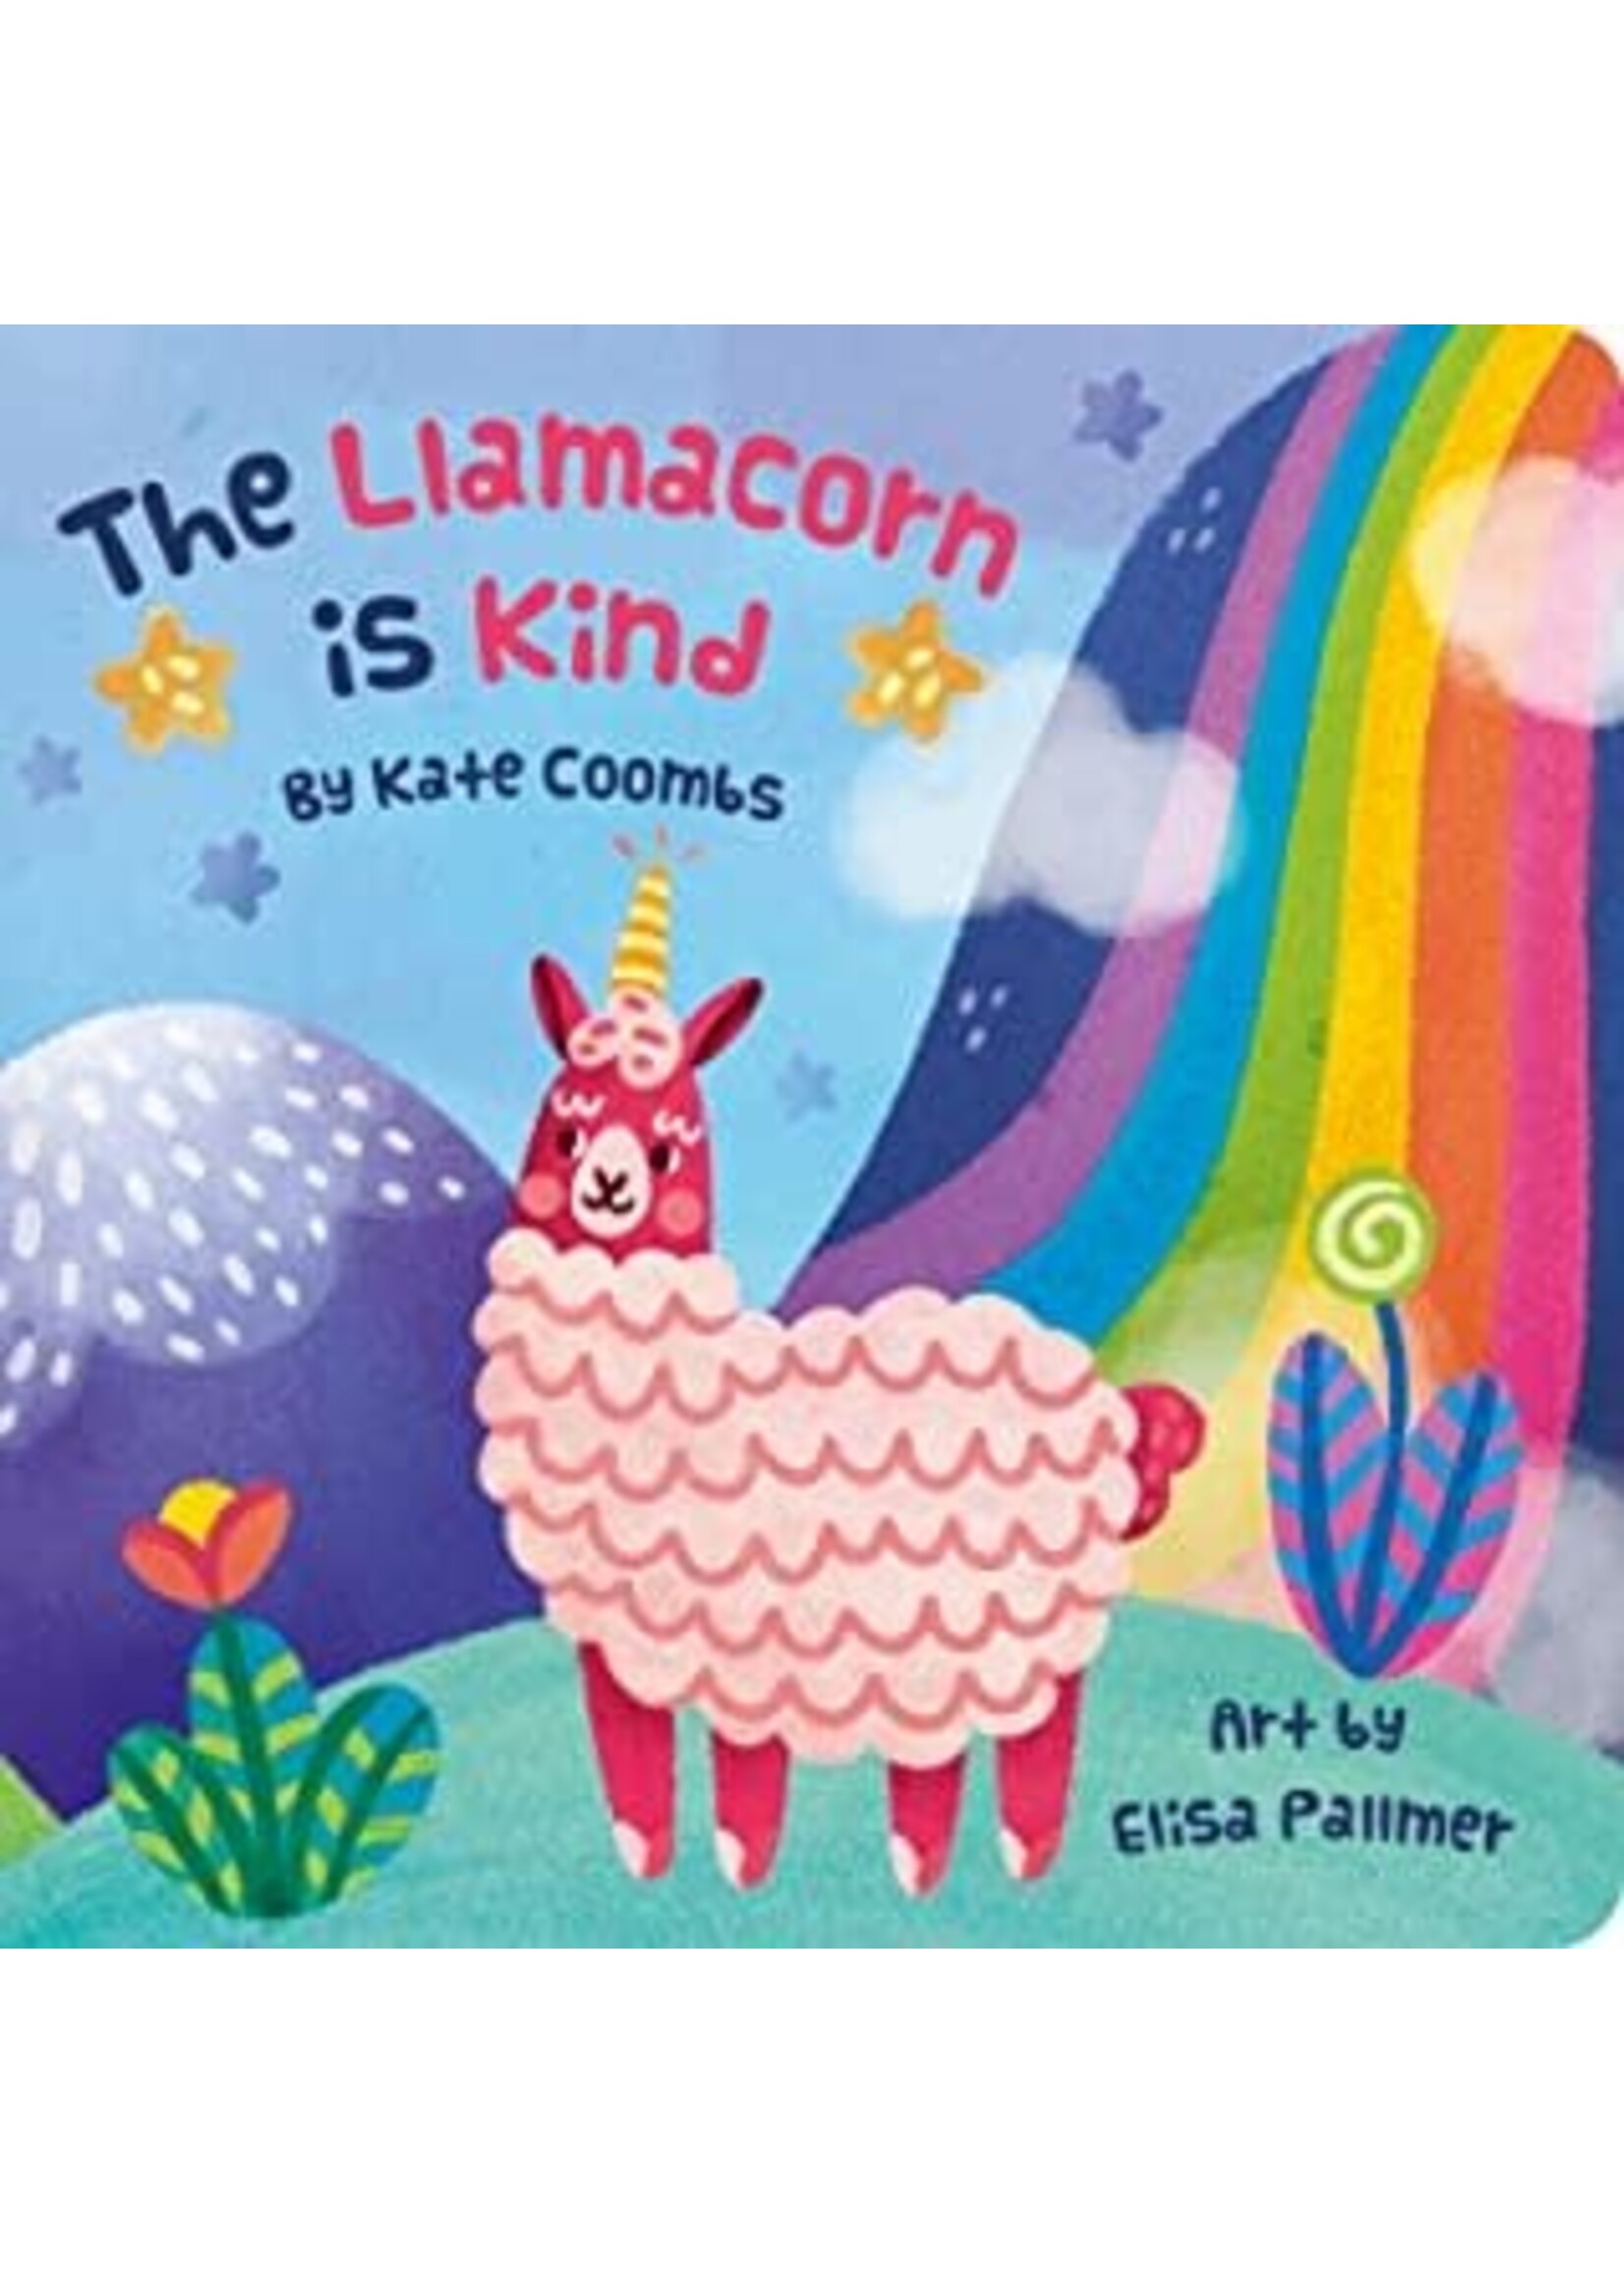 The Llamacorn Is Kind by Kate Coombs,  Elisa Pallmer